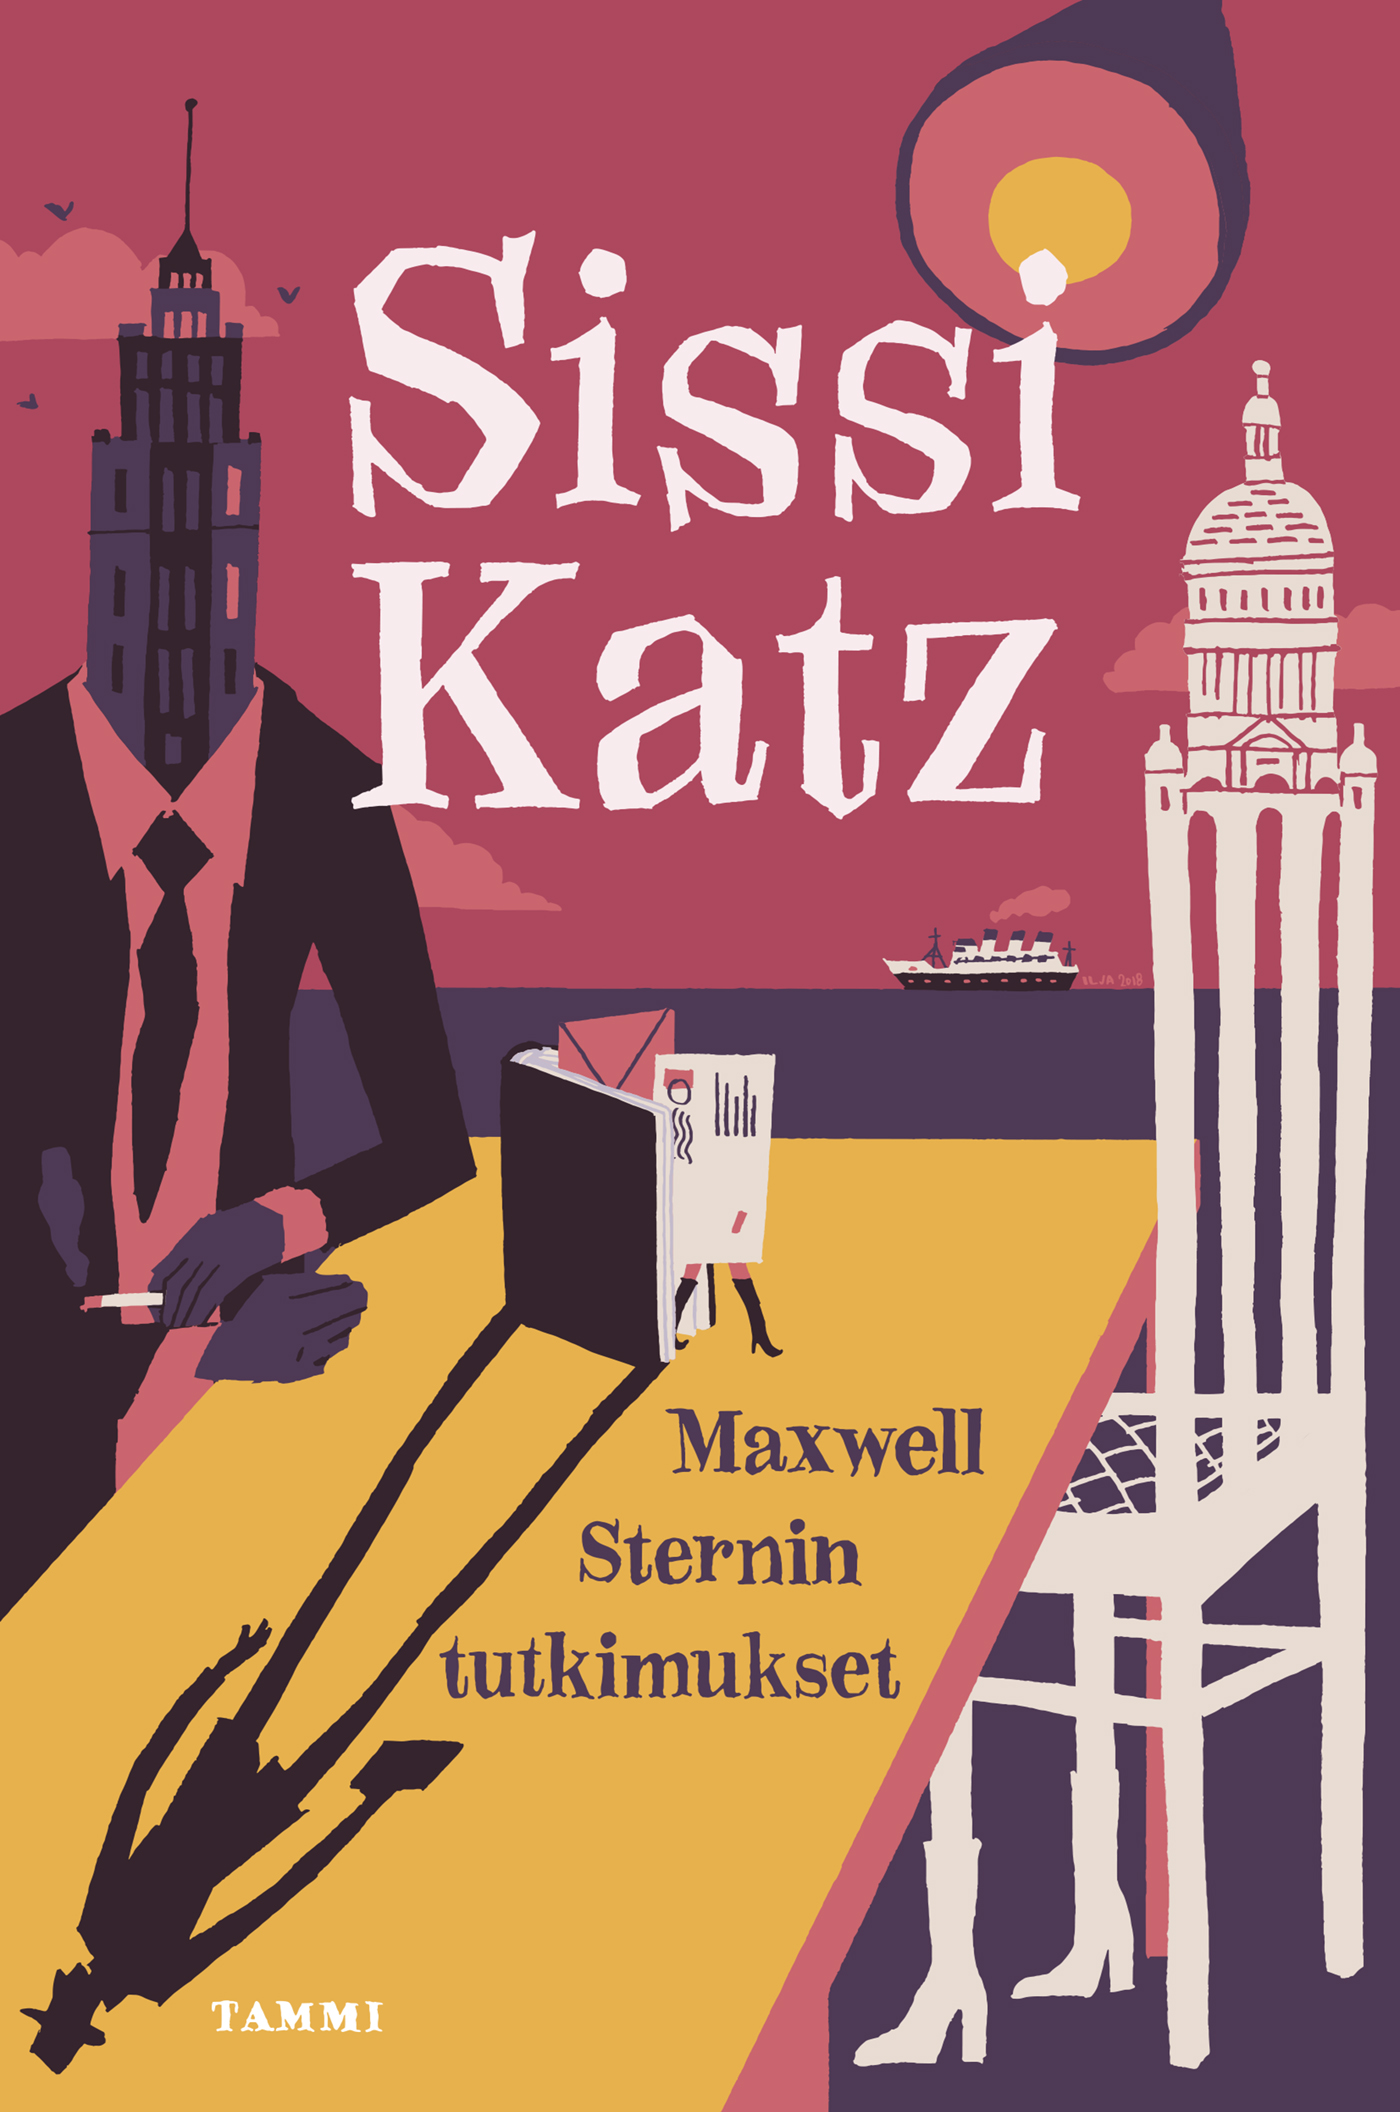 Katz, Sissi - Maxwell Sternin tutkimukset, ebook